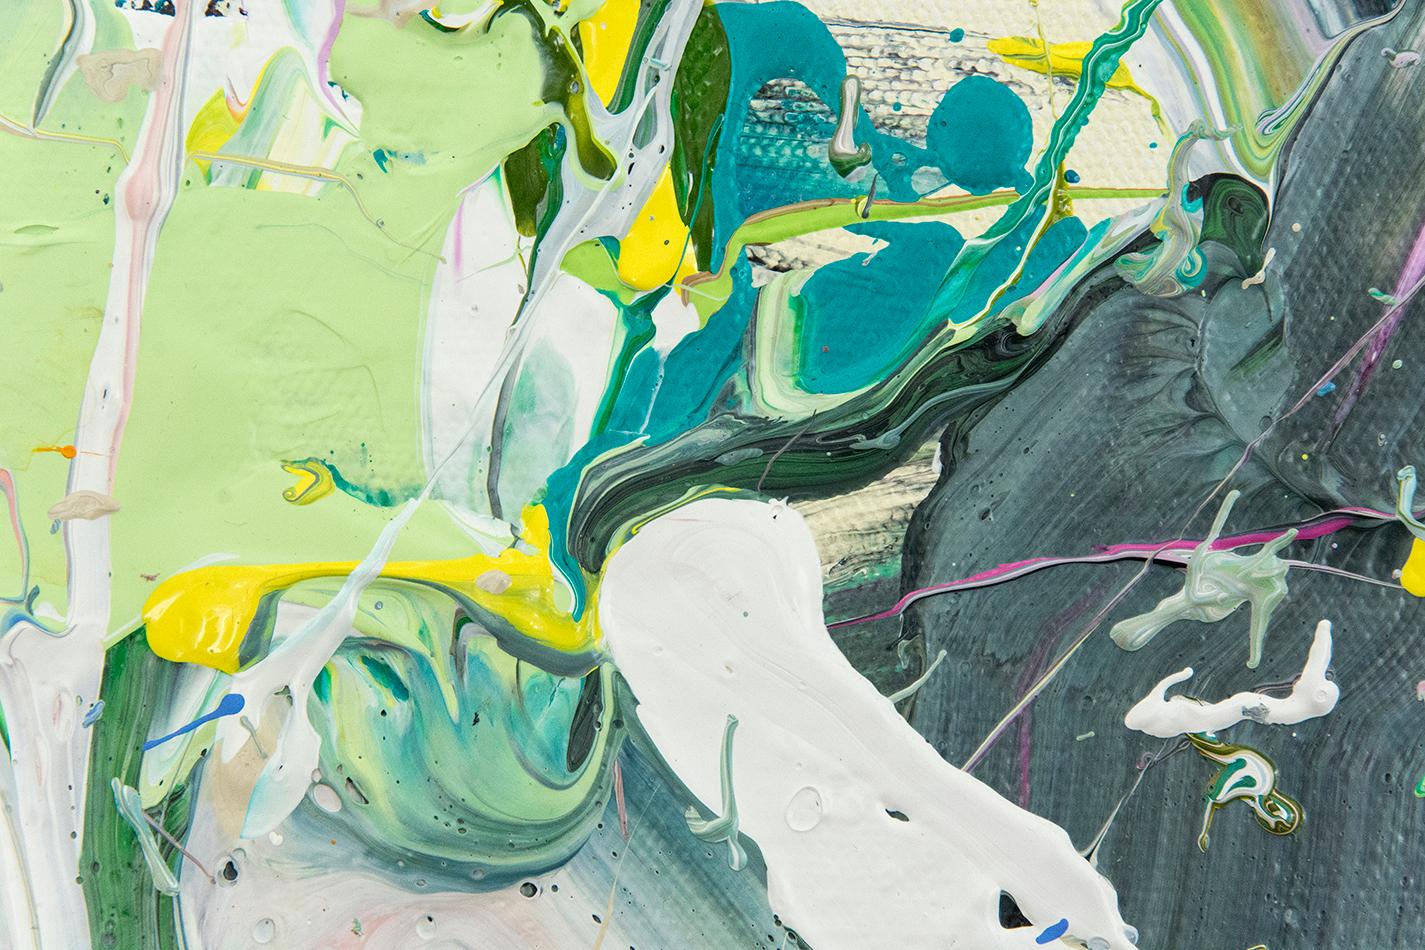 White Rabbit - bright, impasto, abstract expressionist, acrylic on canvas - Abstract Expressionist Painting by Adam Cohen